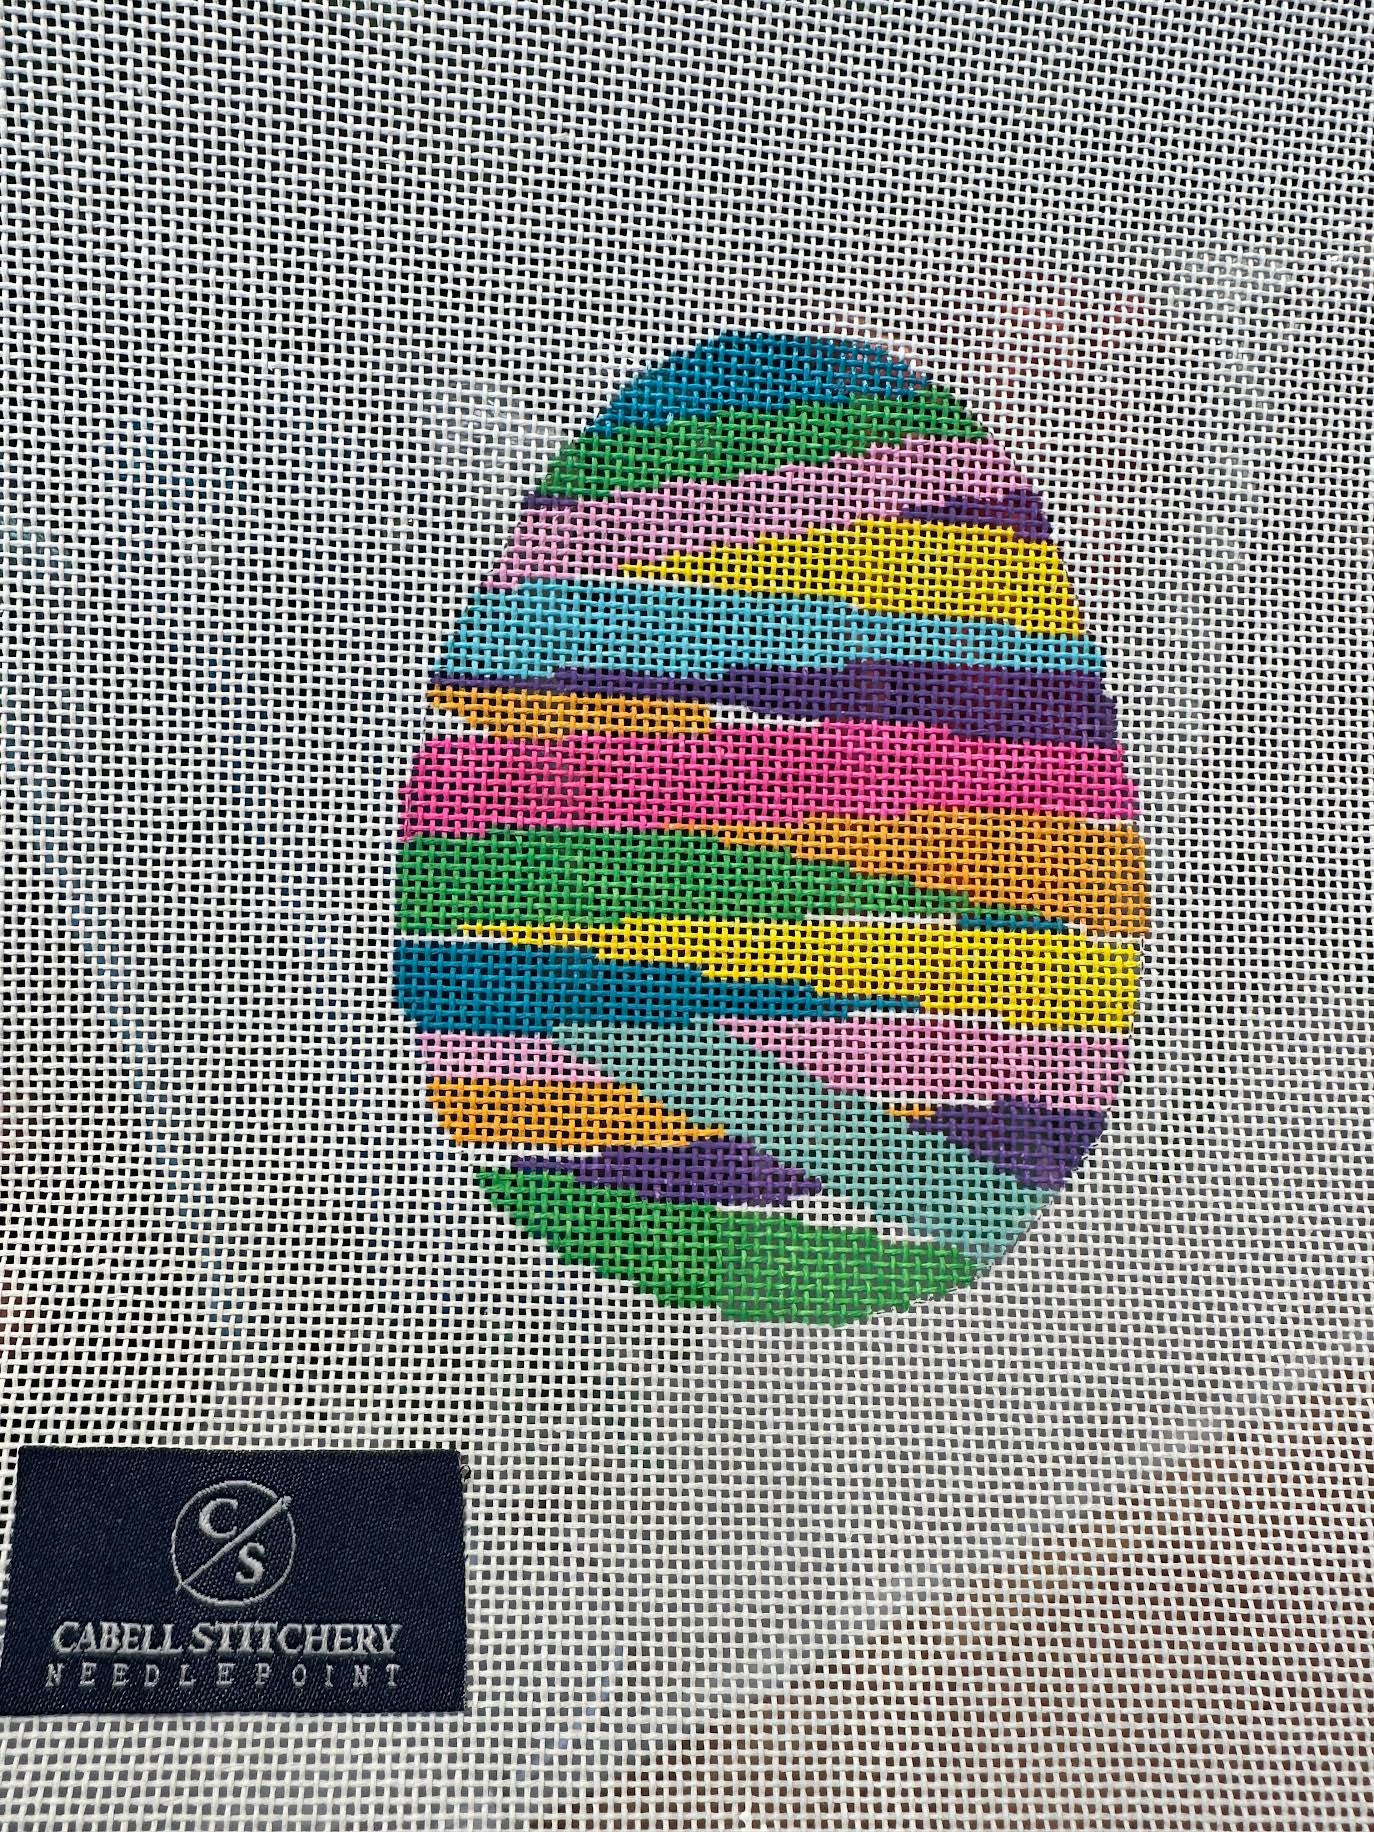 Cabell Stitchery Multi Colored Egg